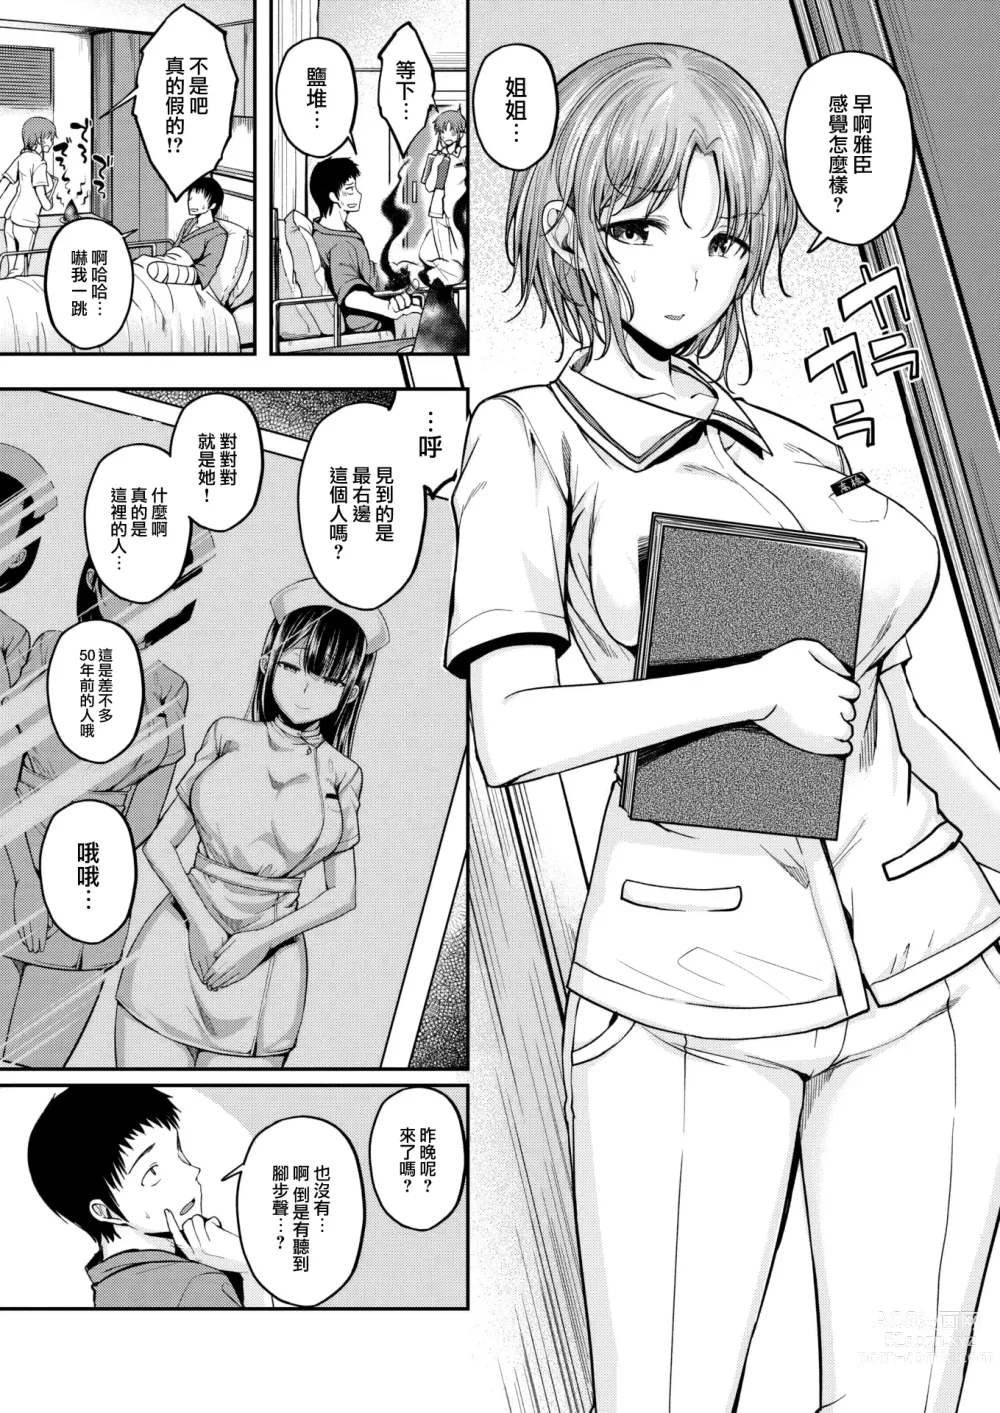 Page 5 of manga Nurse call wa fuyodesu #02